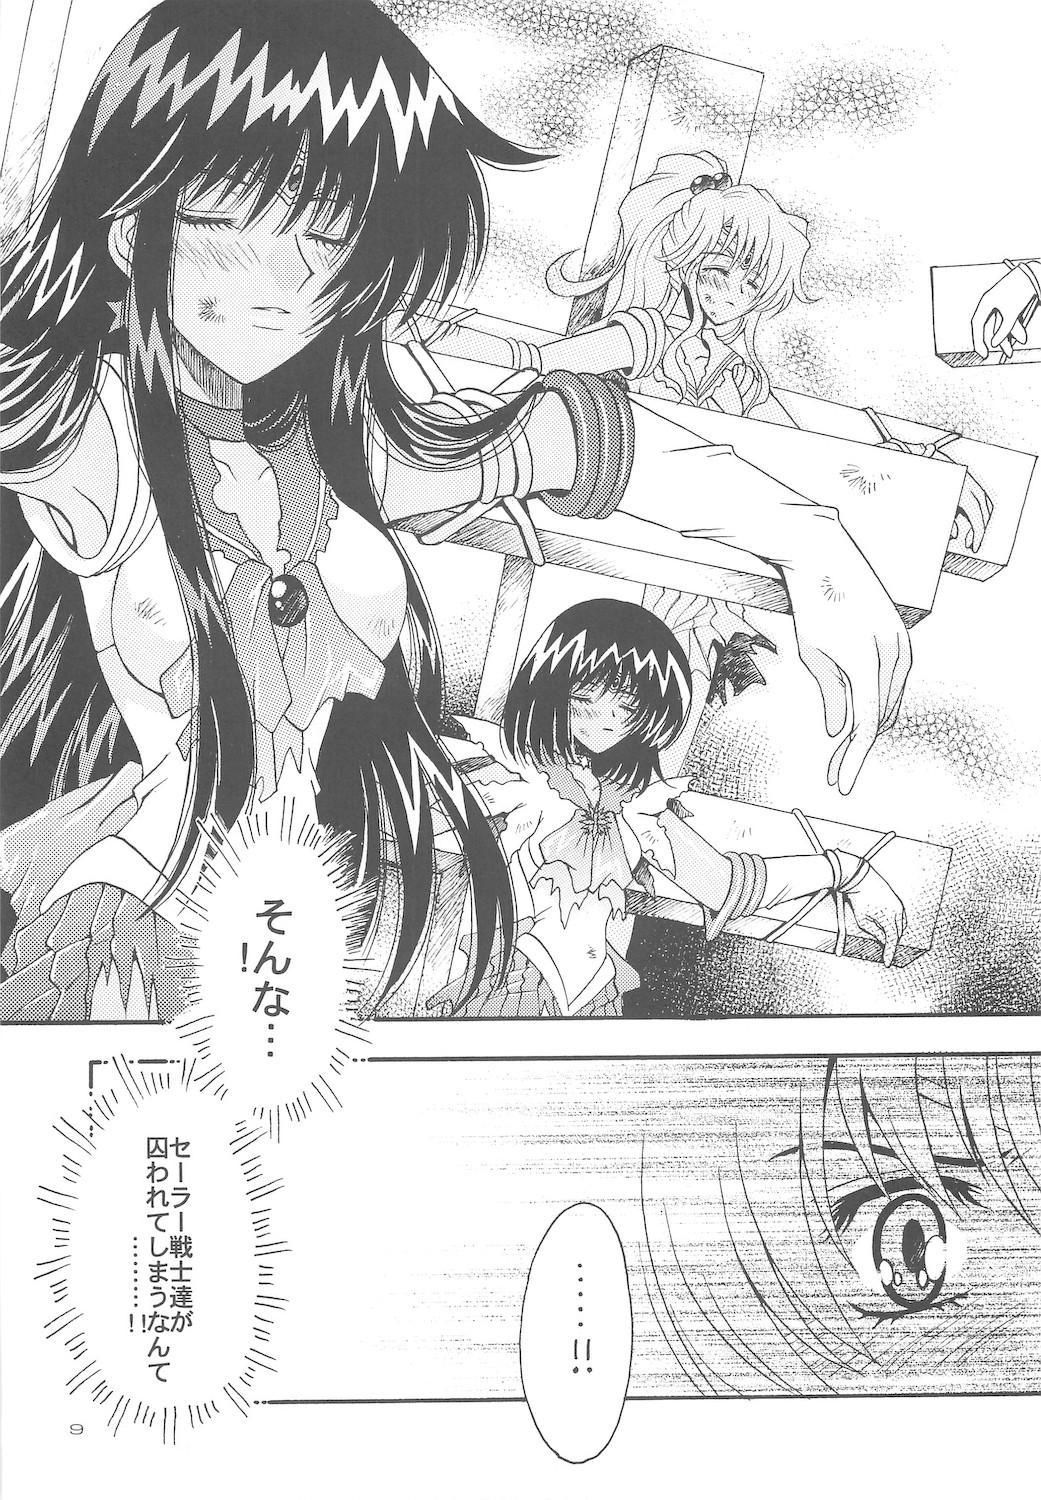 Spread Owaru Sekai dai 4 shou - Sailor moon Studs - Page 9